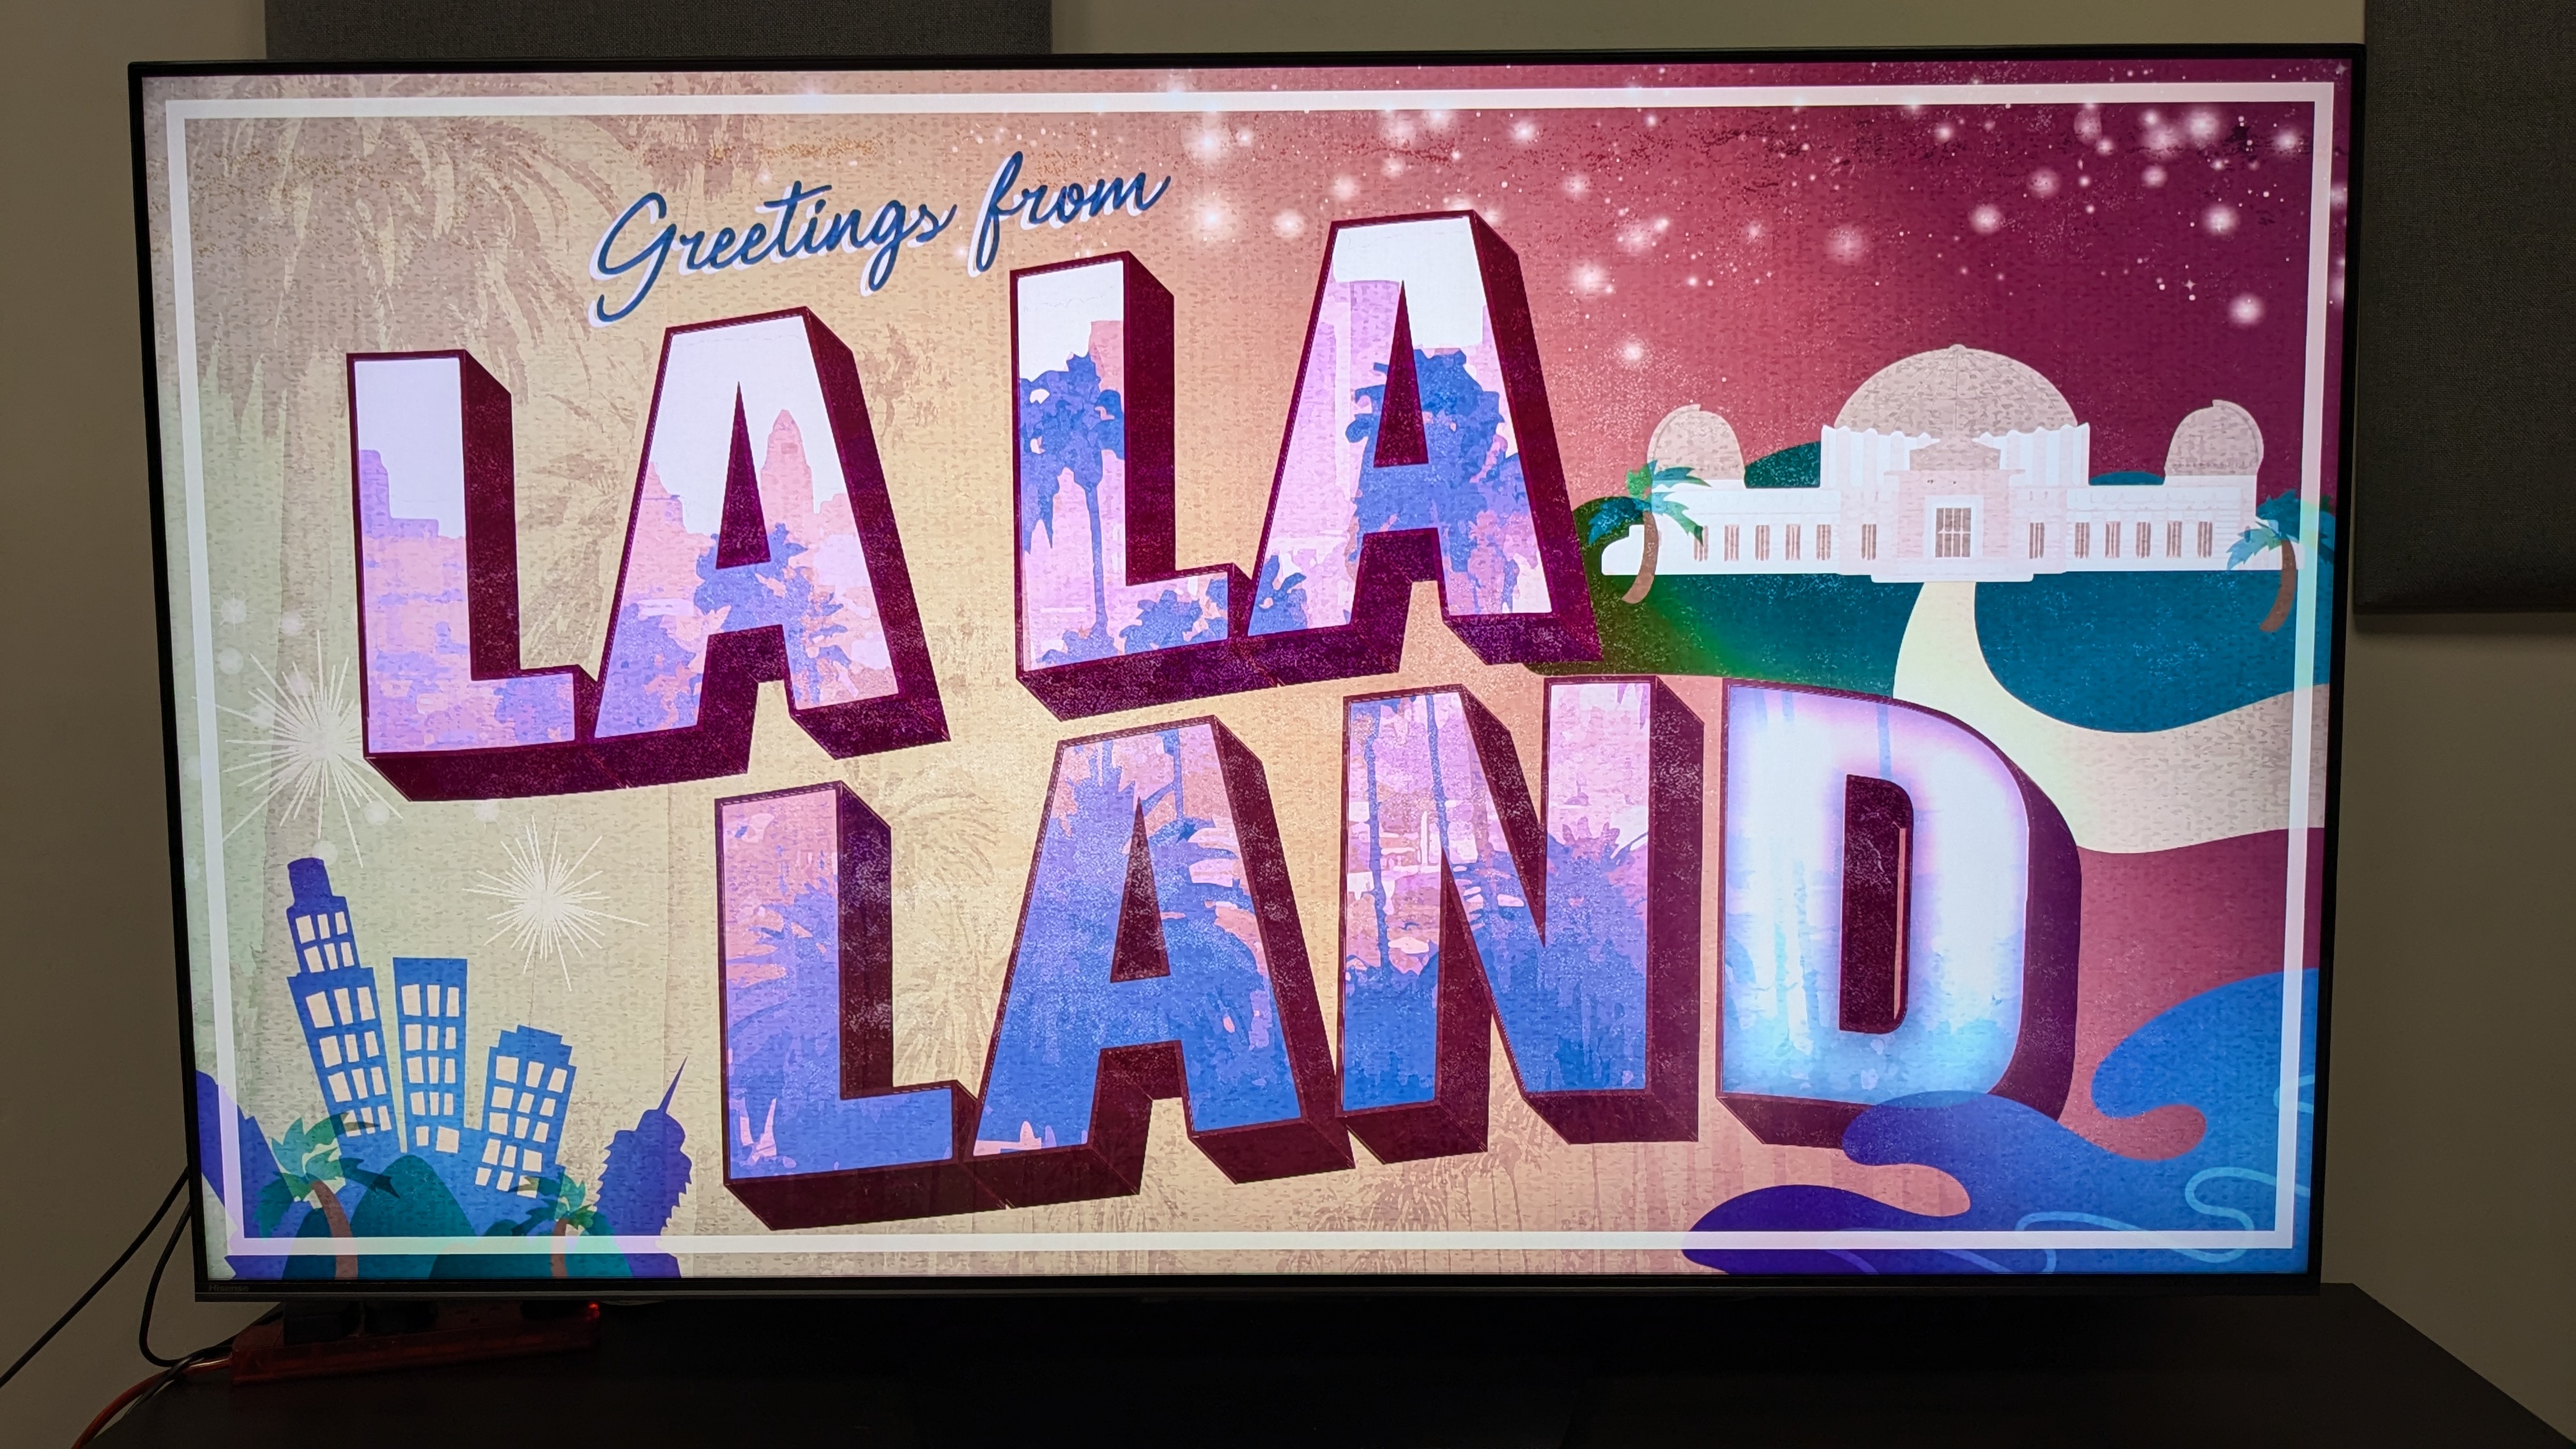 Hisense U7N with La La Land 4K Blu-ray home menu on screen